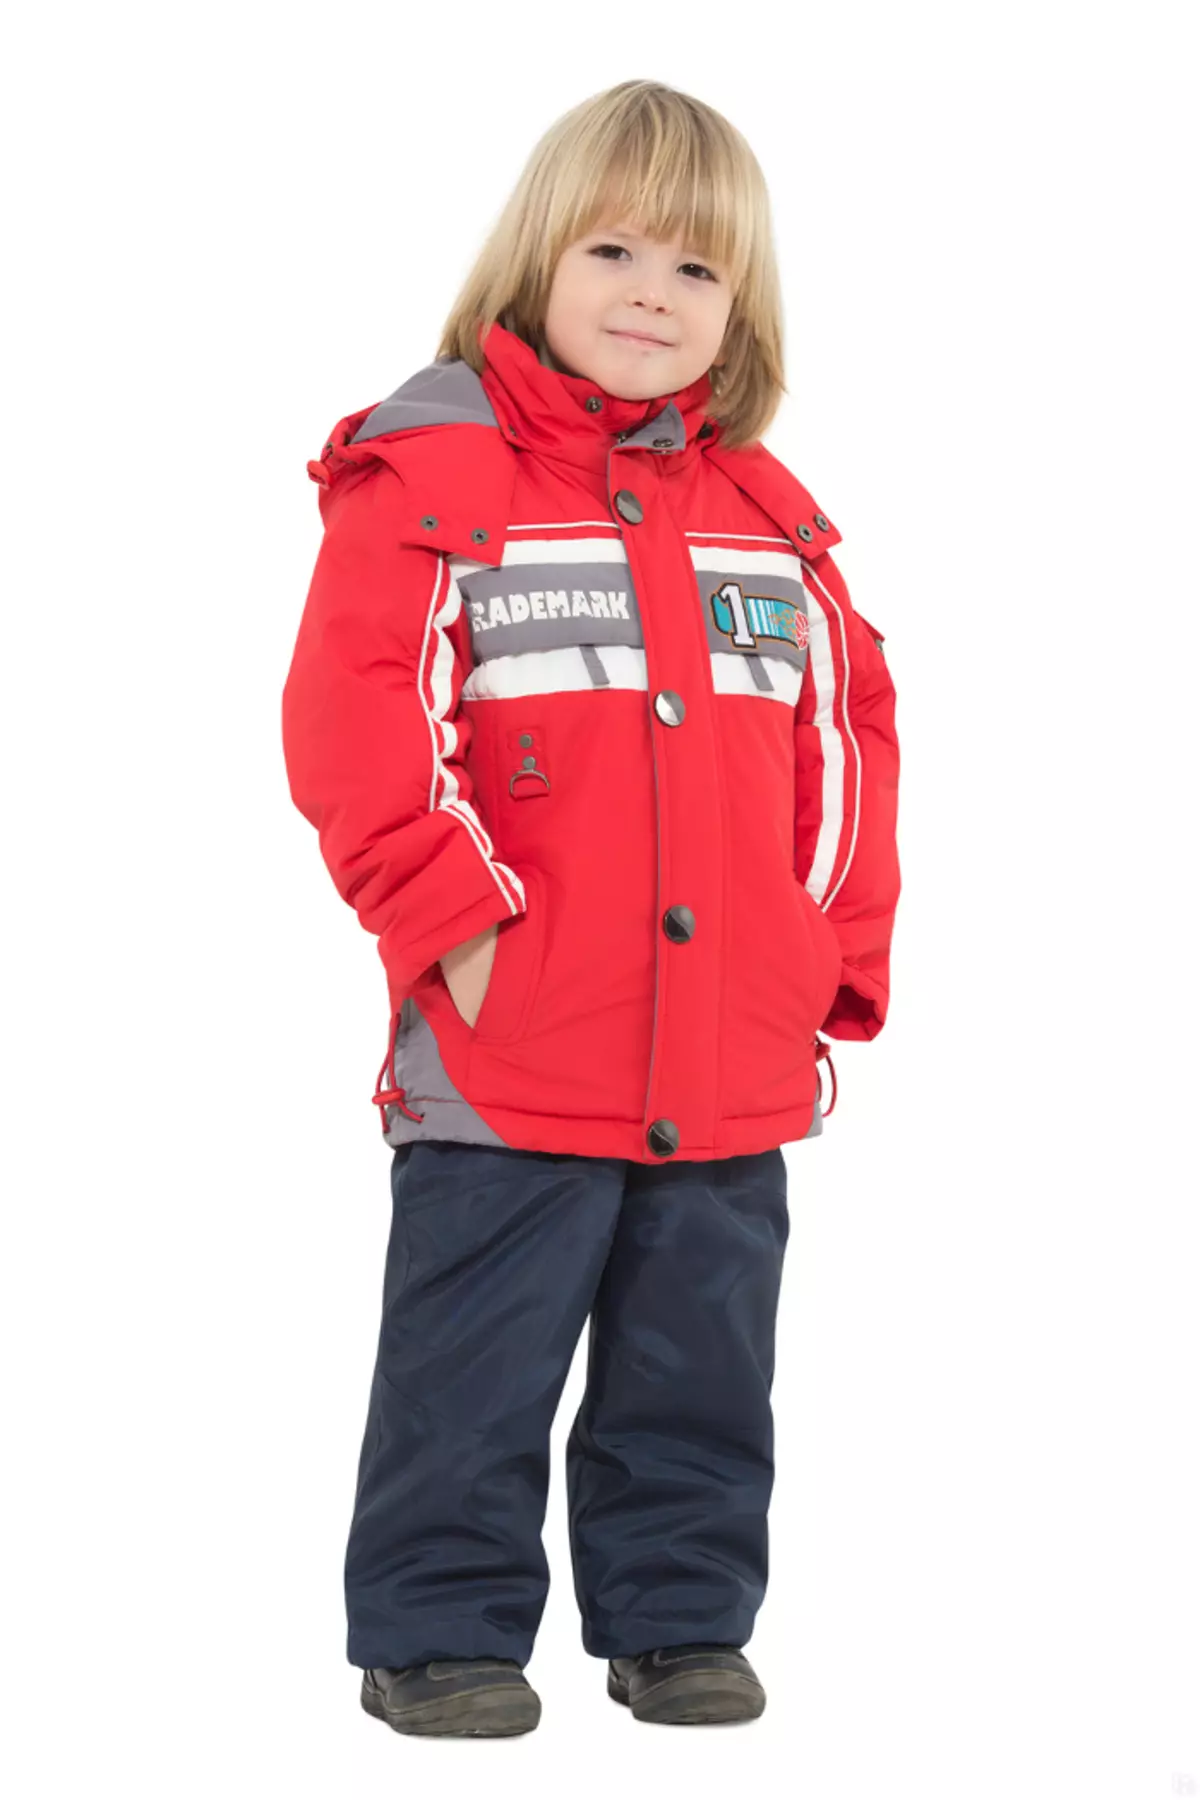 Bilemi (38 장의 사진) : 어린이 의류, 겨울 키트 및 바지, 레인 코트 및 재킷, 브랜드 리뷰 3802_33